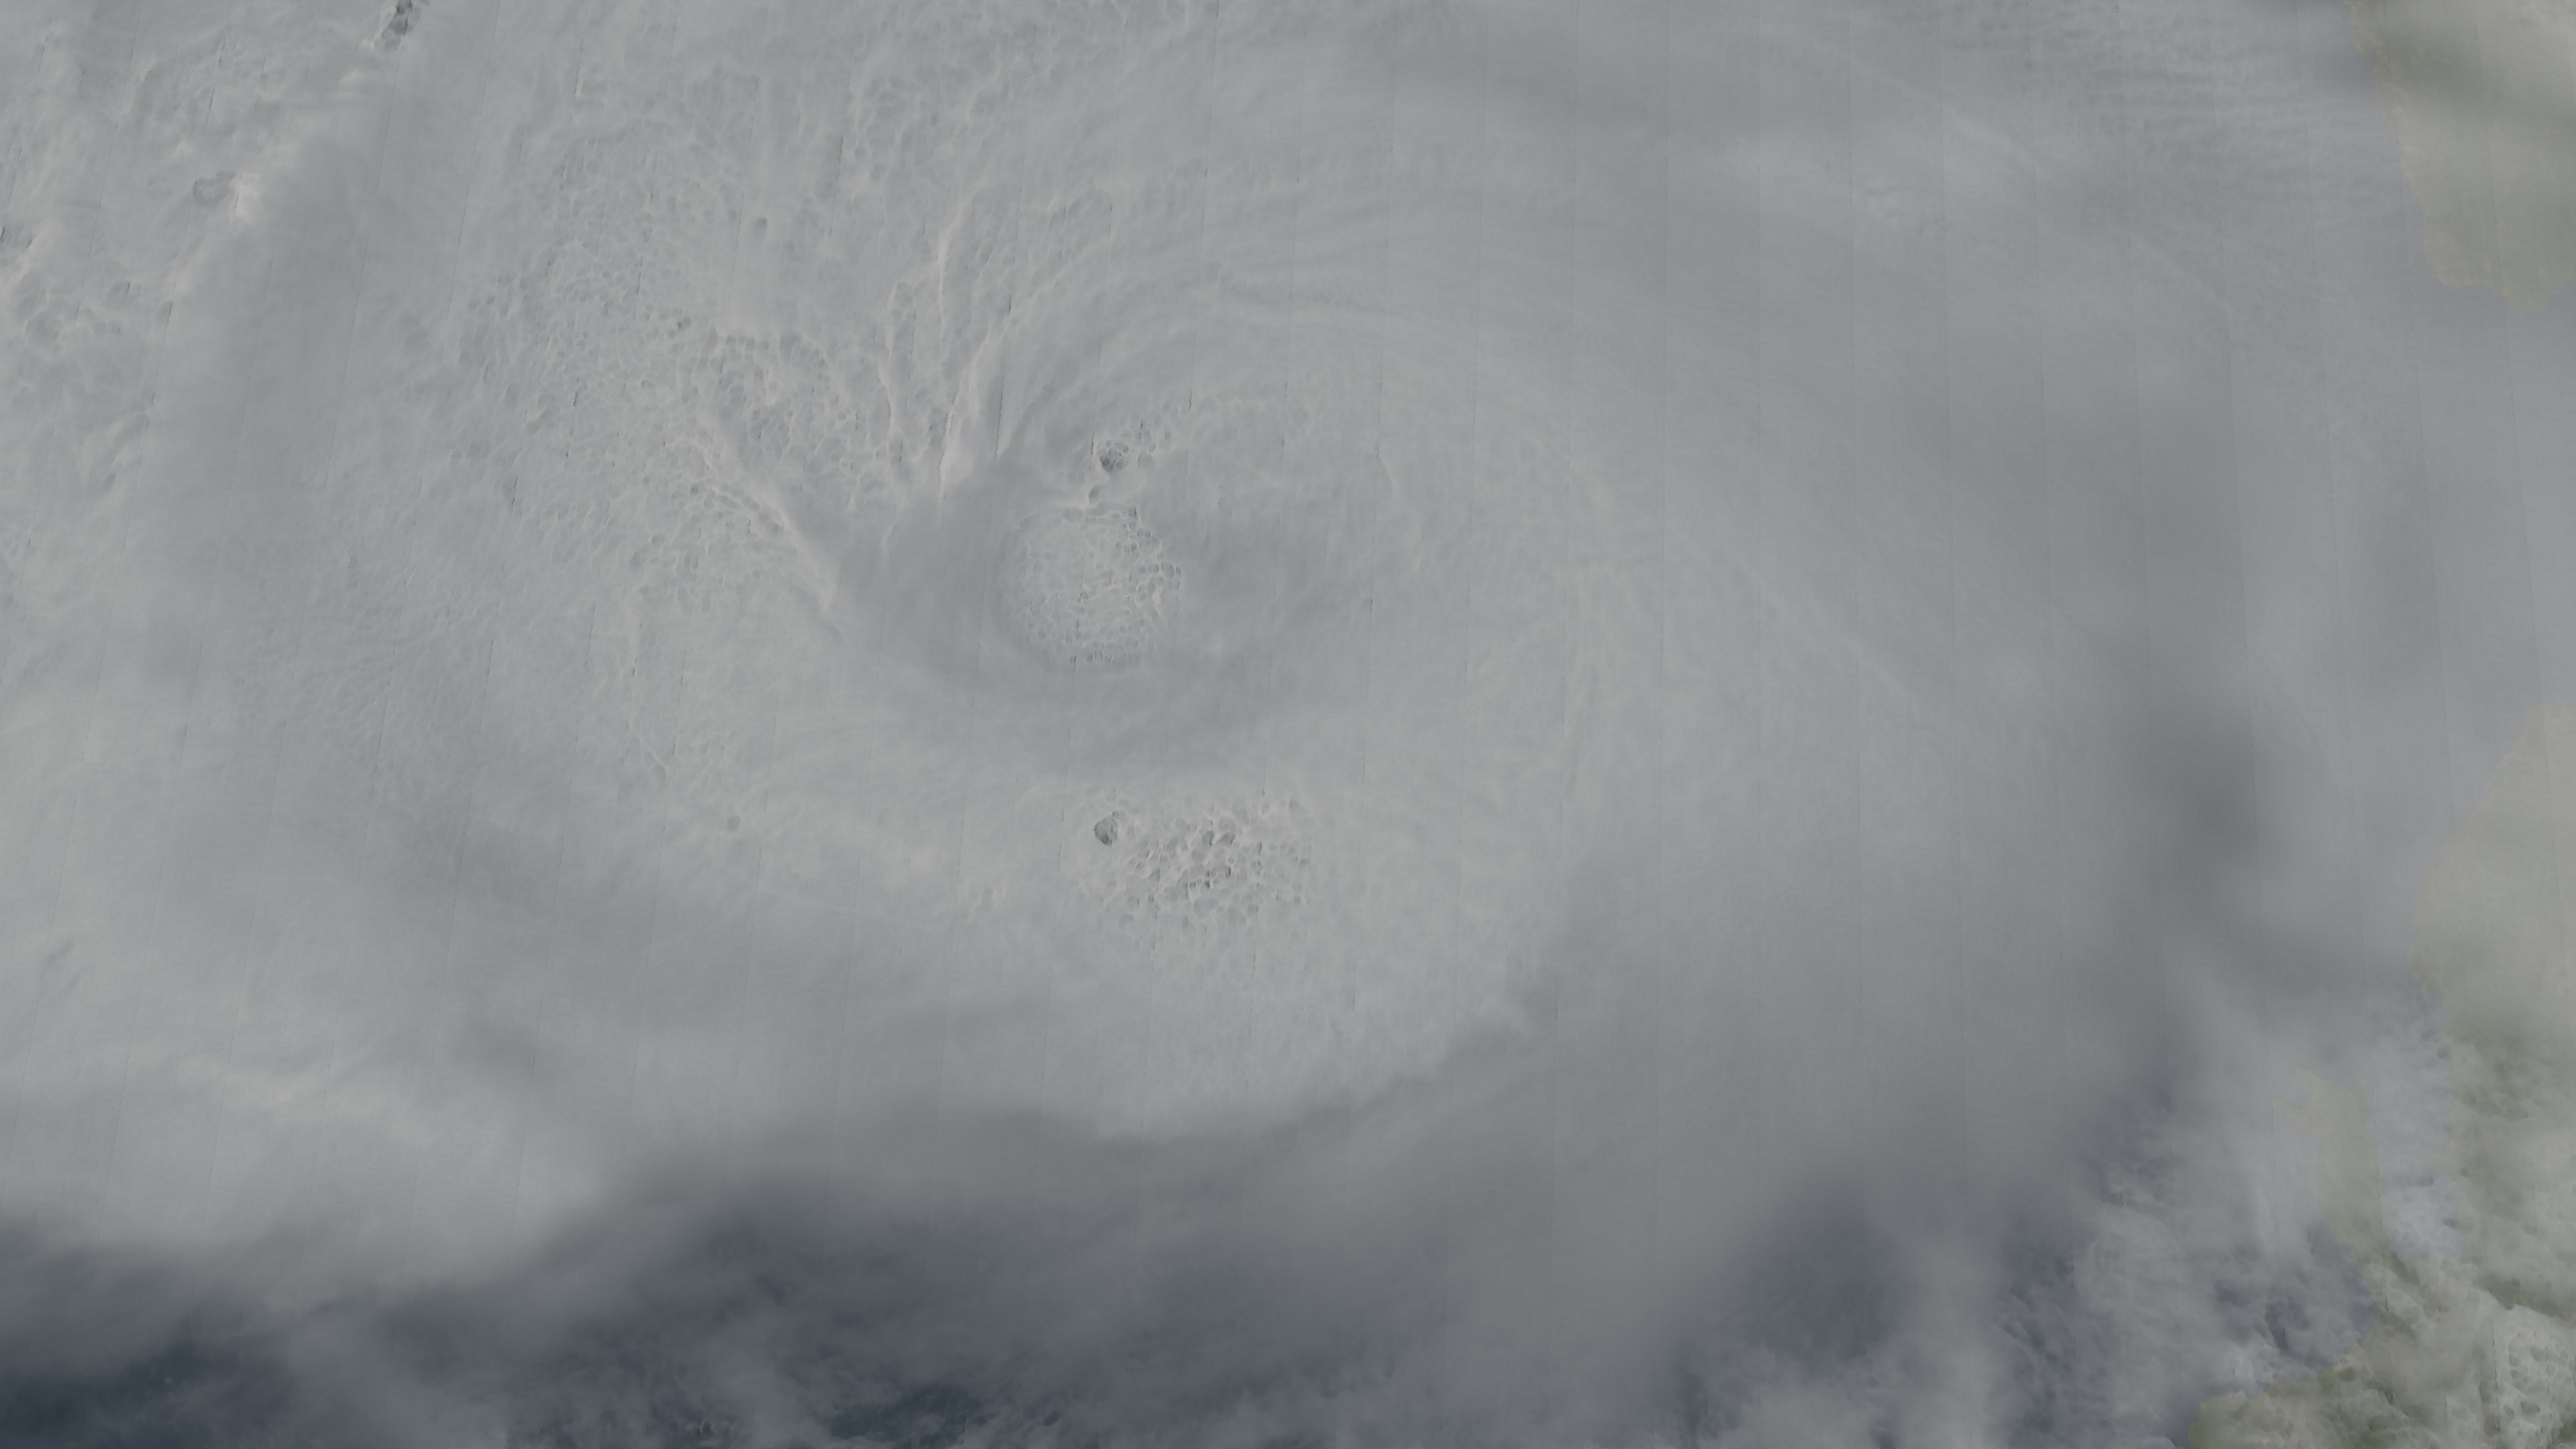 NASA's Terra satellite sees this view of Hurricane Earl on August 31, 2010.